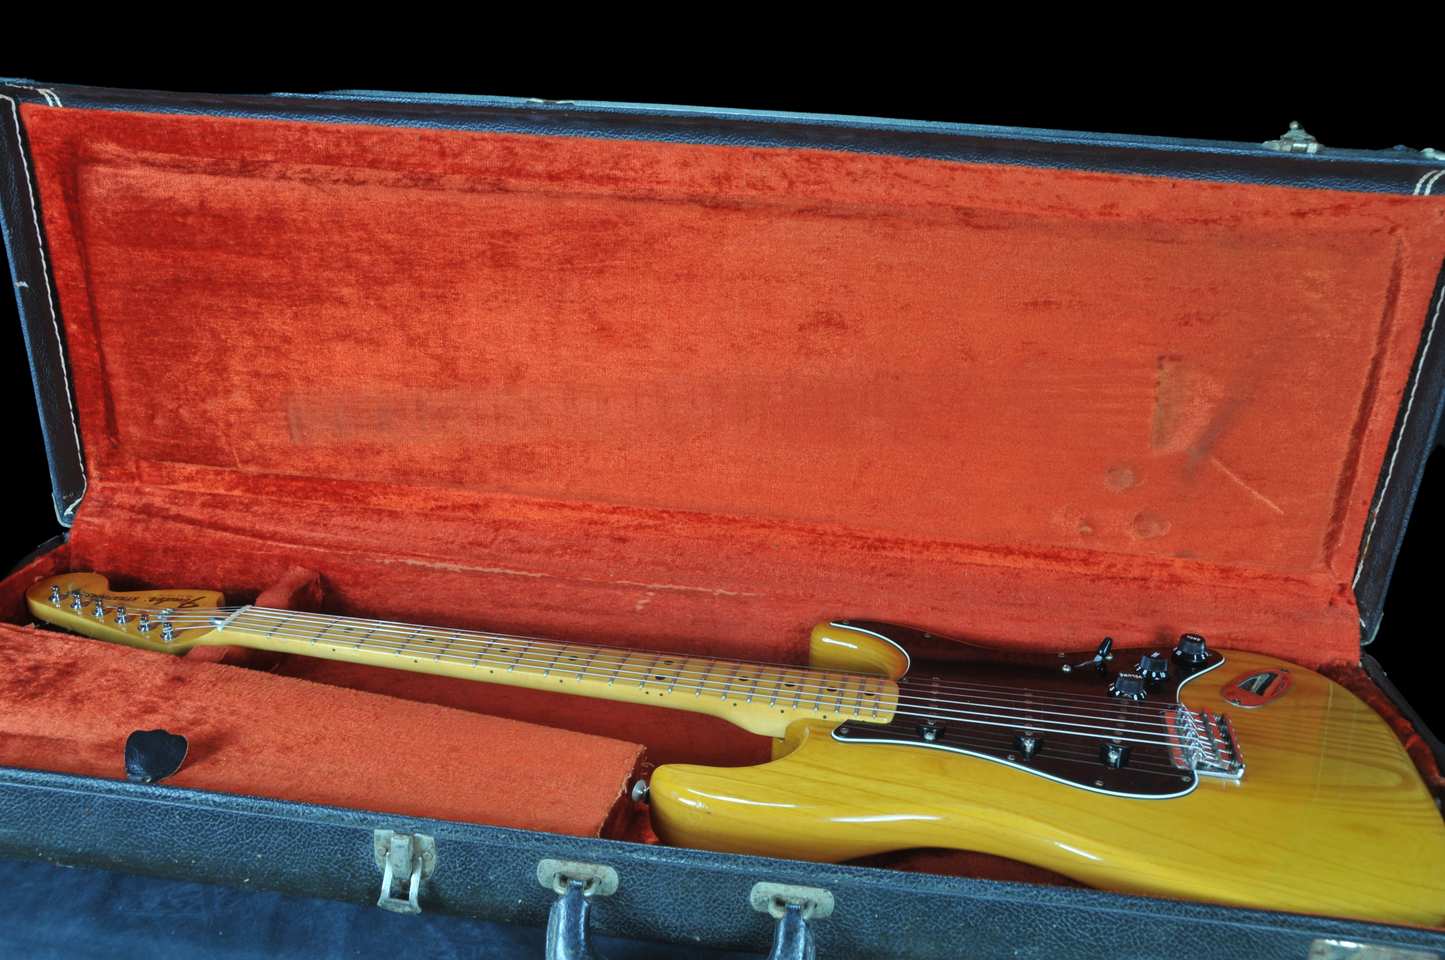 Fender Stratocaster Natural Hardtail 1977